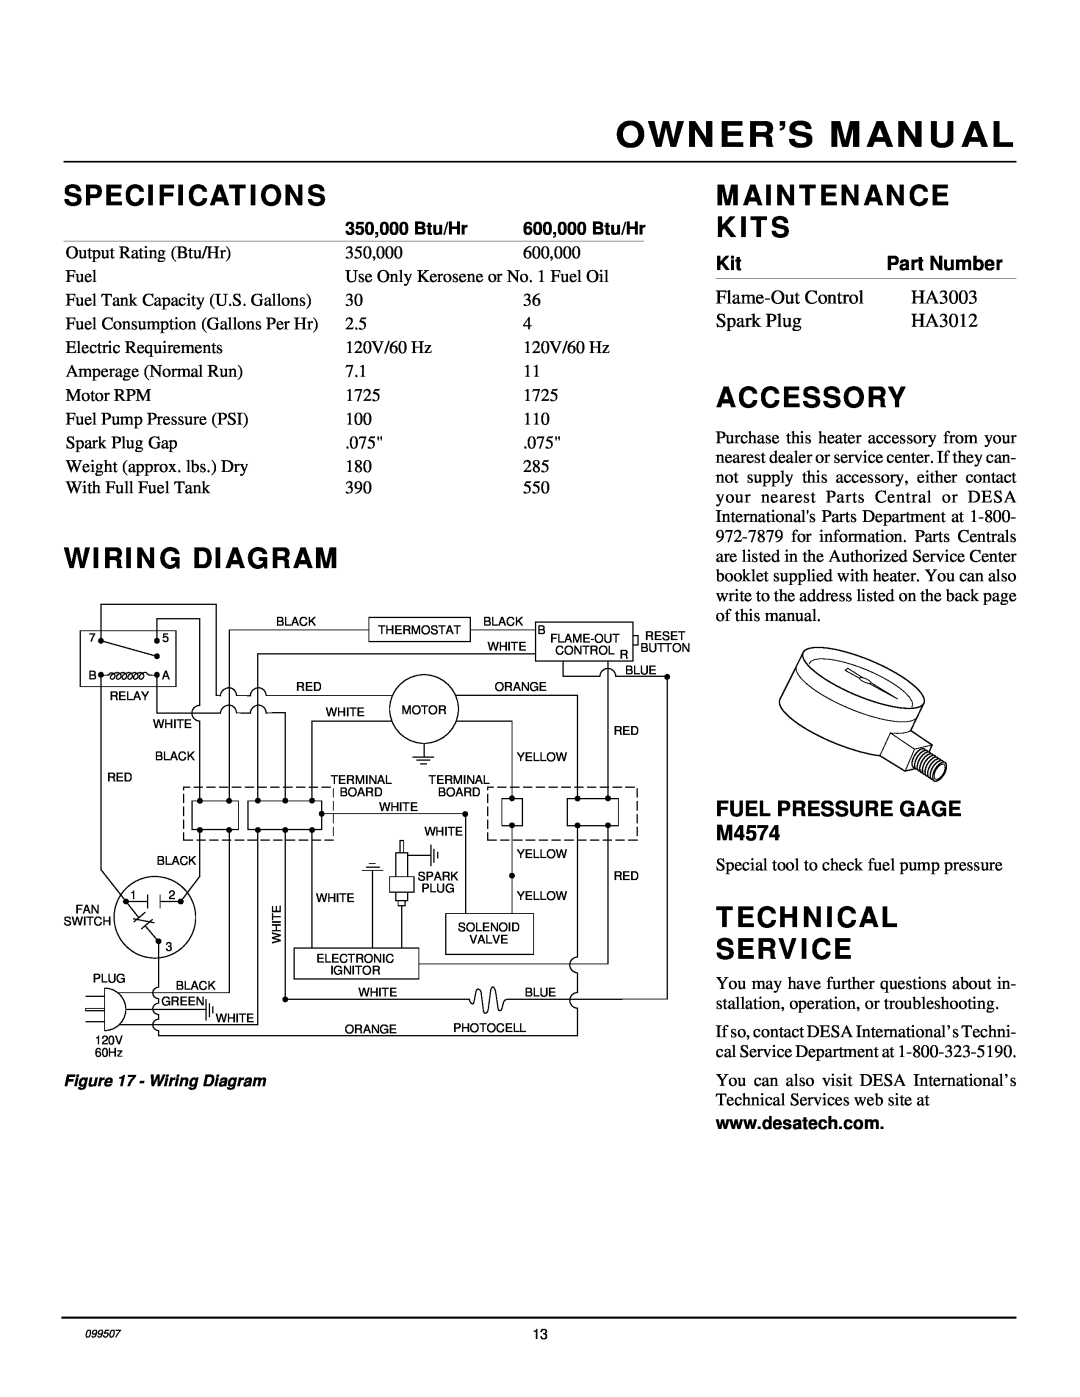 Desa B350D, B600D Specifications, Wiring Diagram, Maintenance Kits, Accessory, Technical Service, FUEL PRESSURE GAGE M4574 